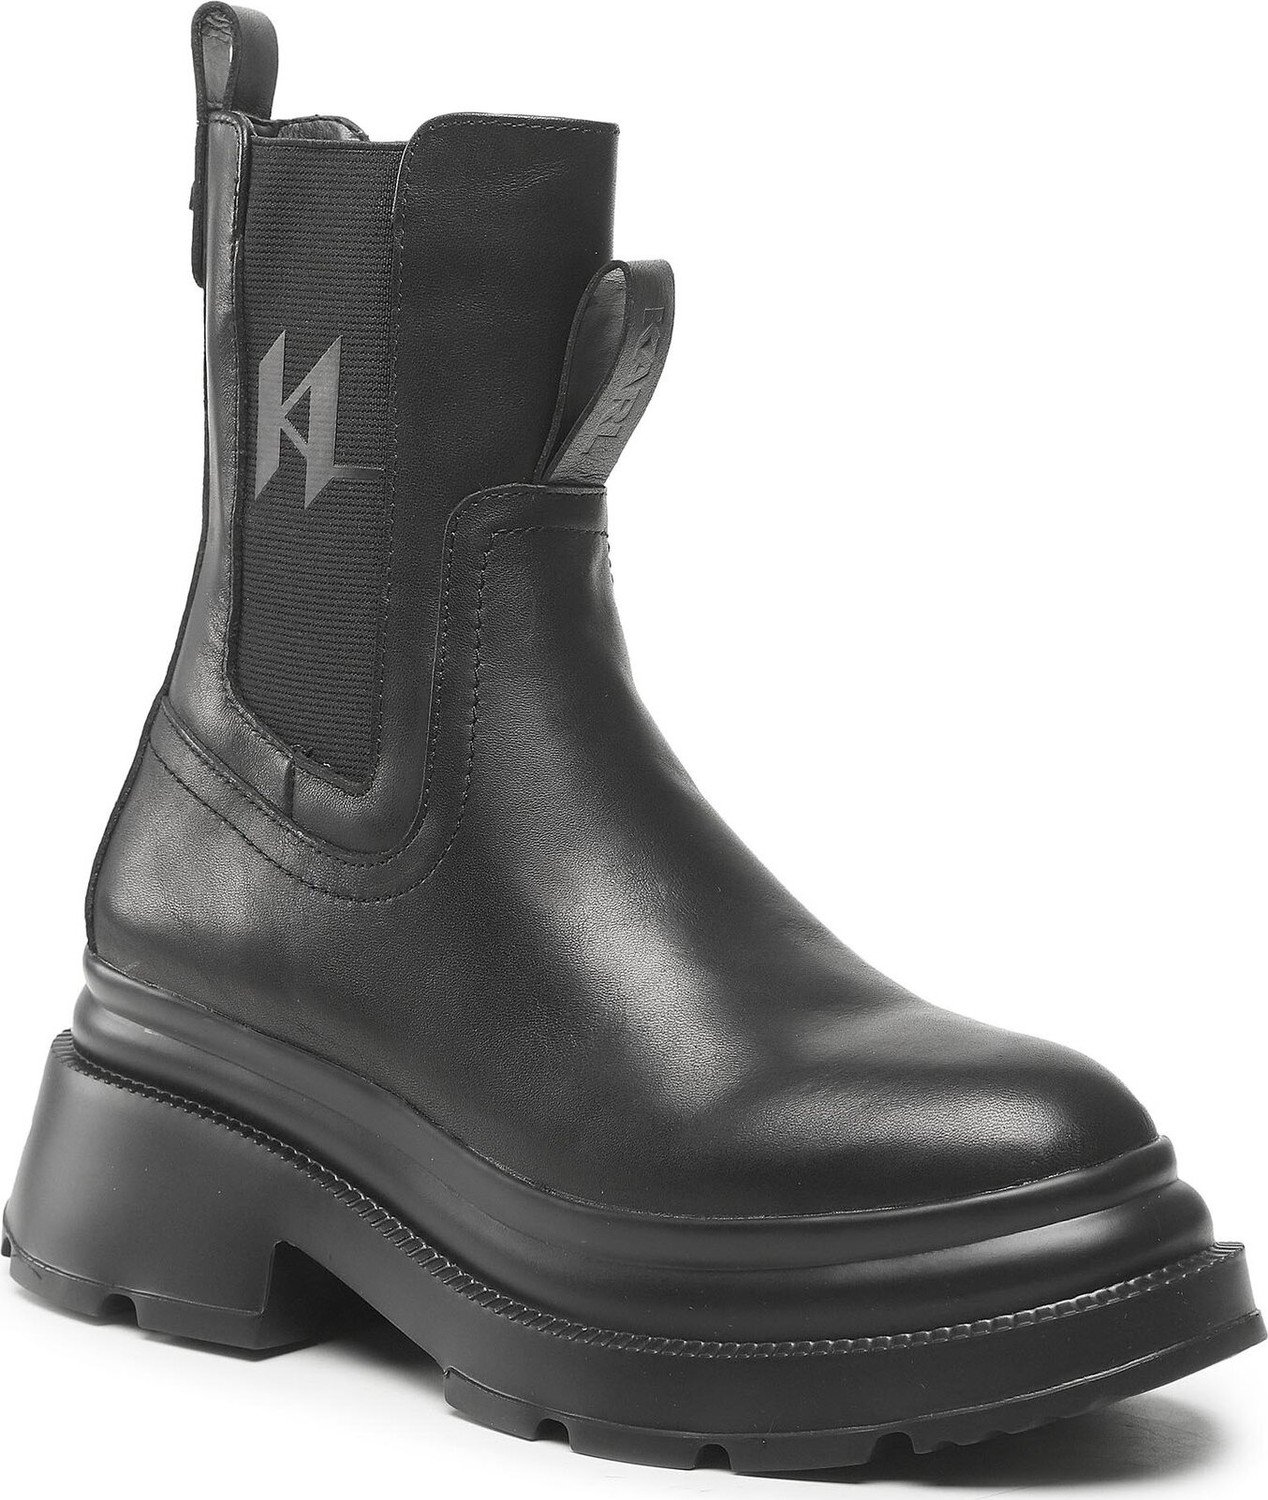 Kotníková obuv s elastickým prvkem KARL LAGERFELD KL45065 Black Lthr